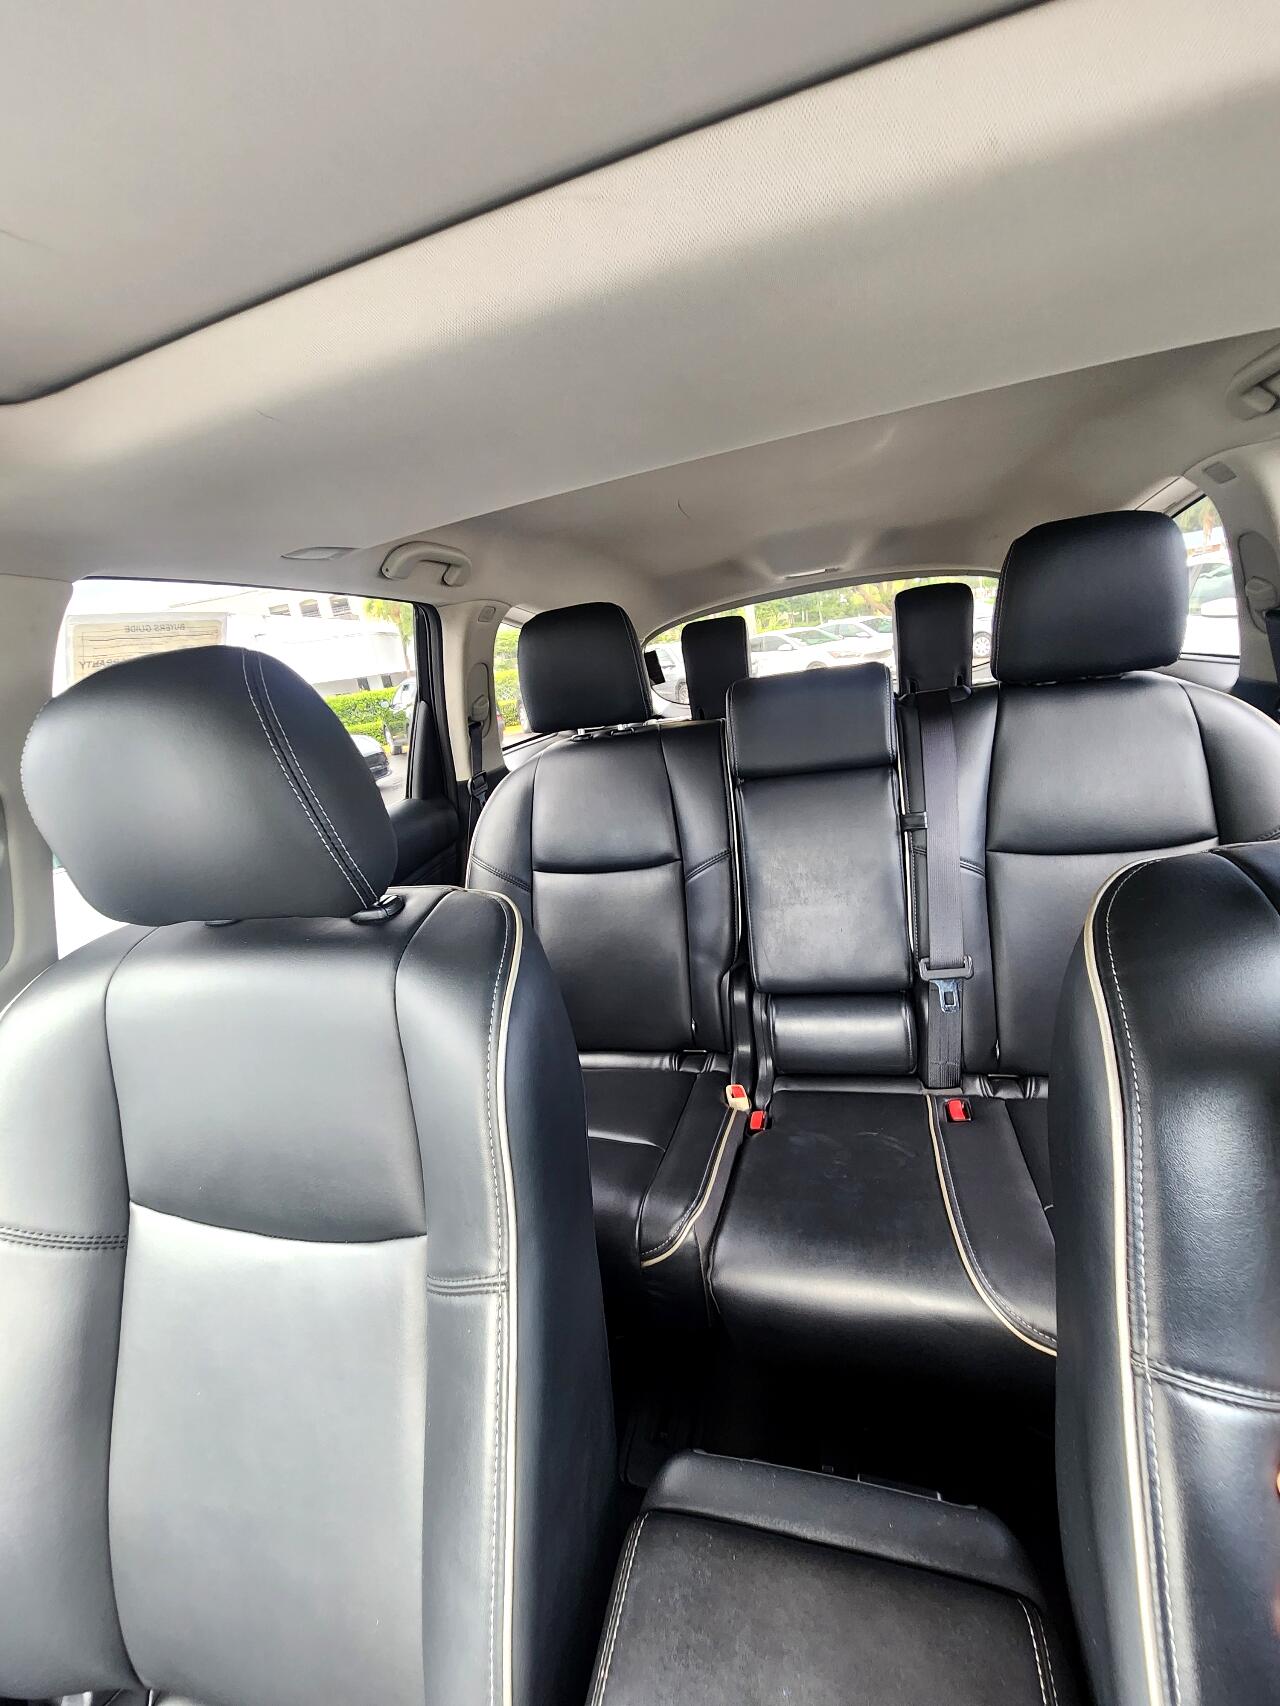 2020 Infiniti QX60 SUV / Crossover - $27,495